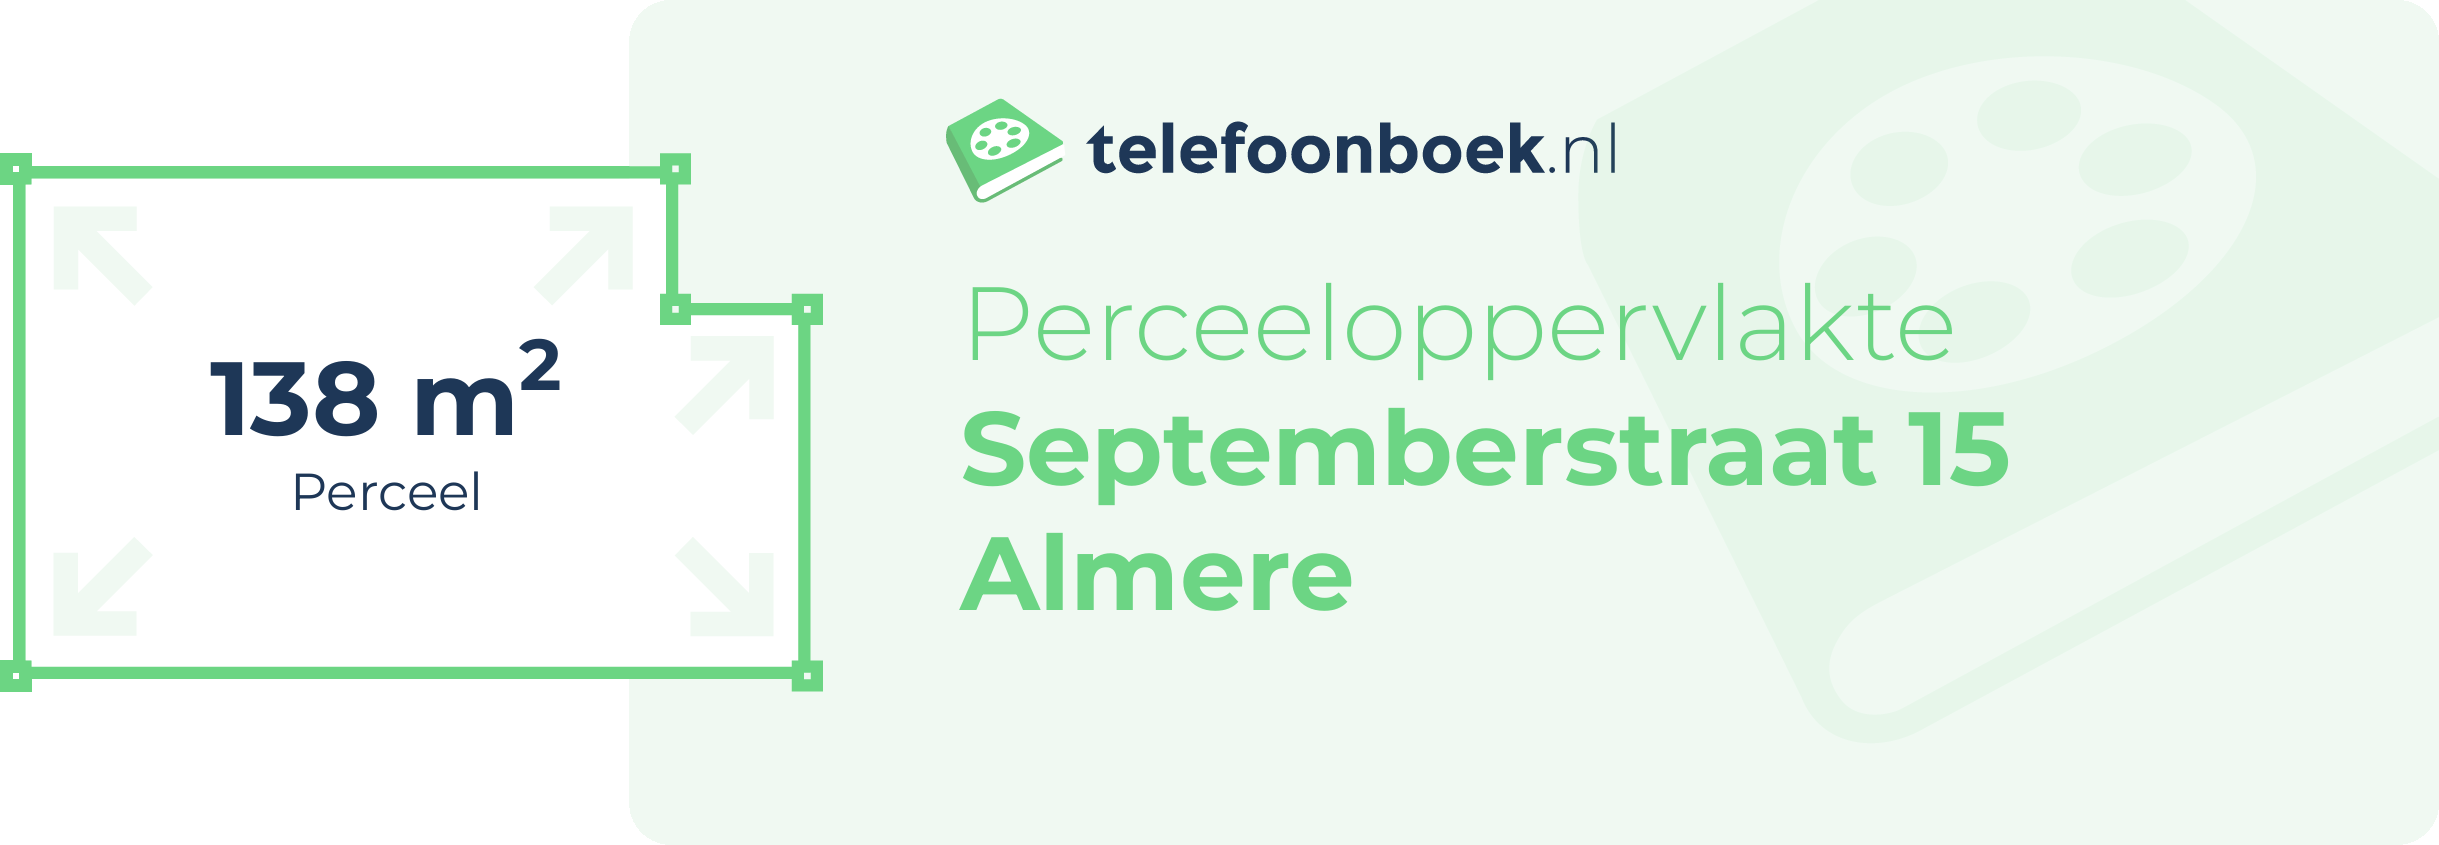 Perceeloppervlakte Septemberstraat 15 Almere